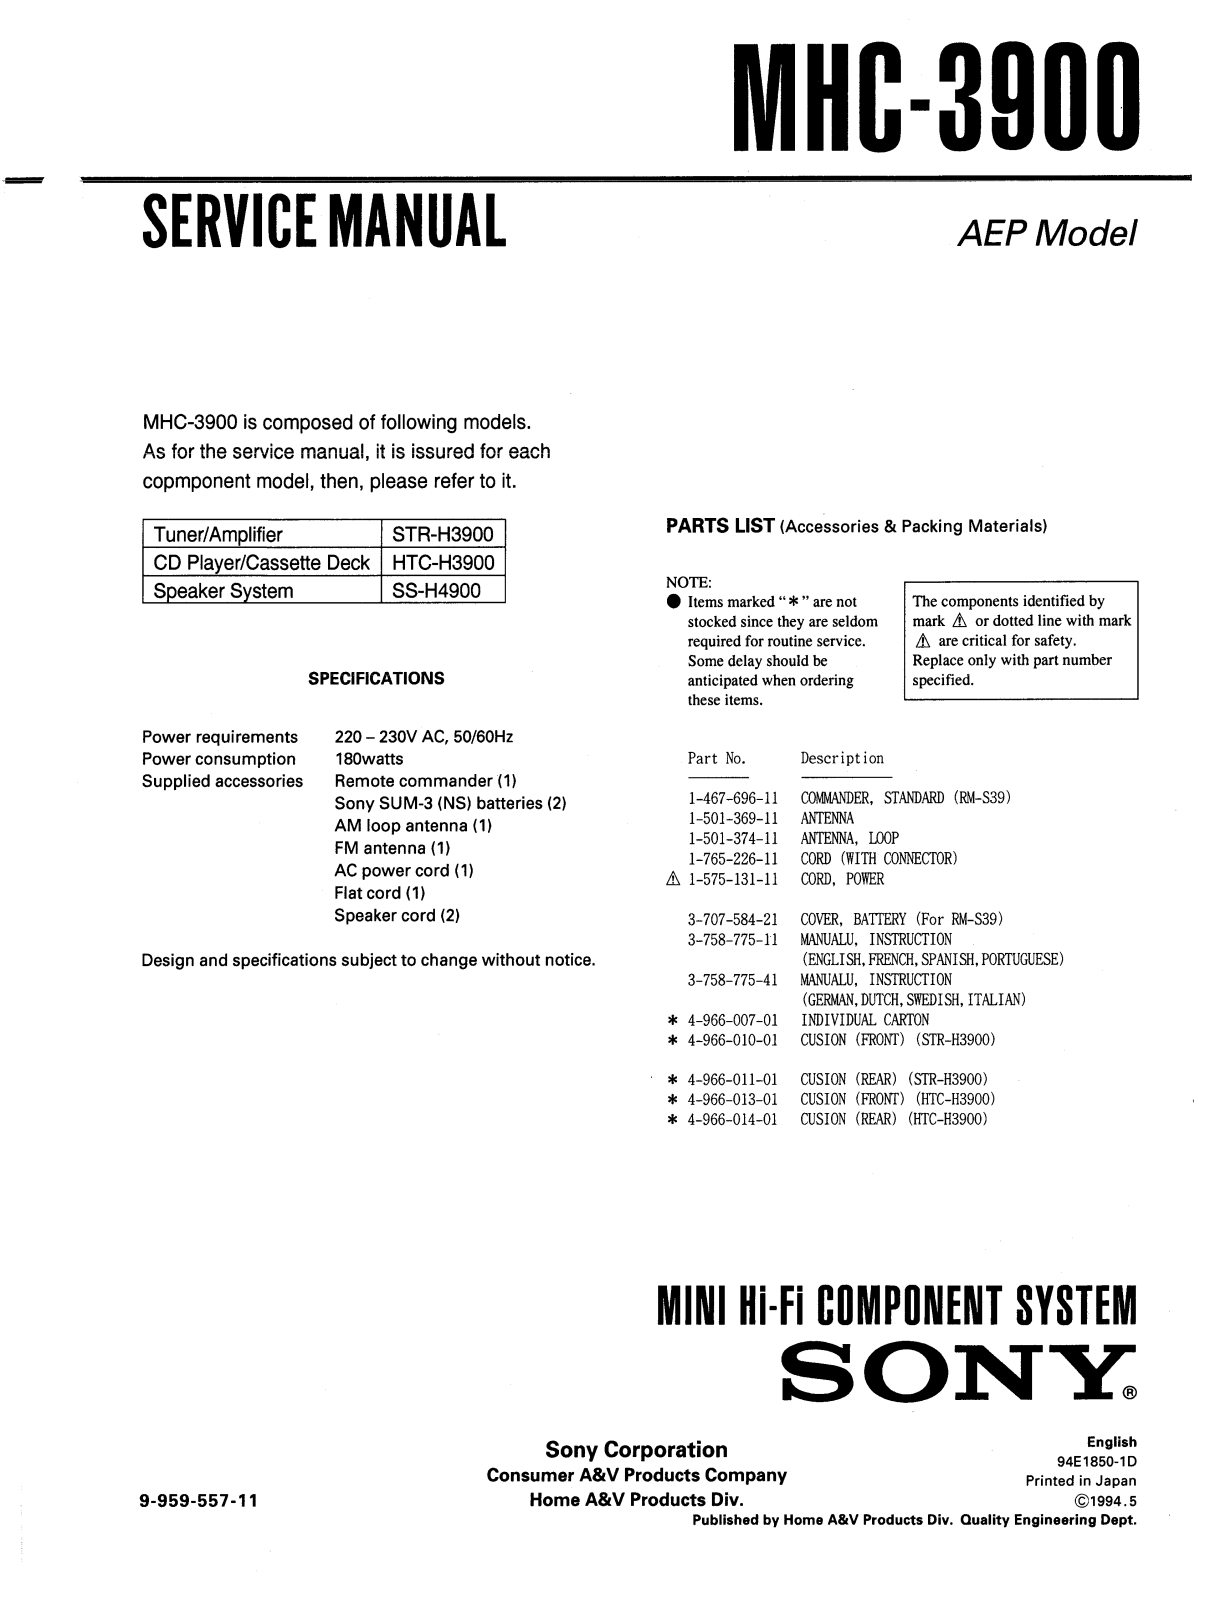 Sony MHC3900 Service Manual